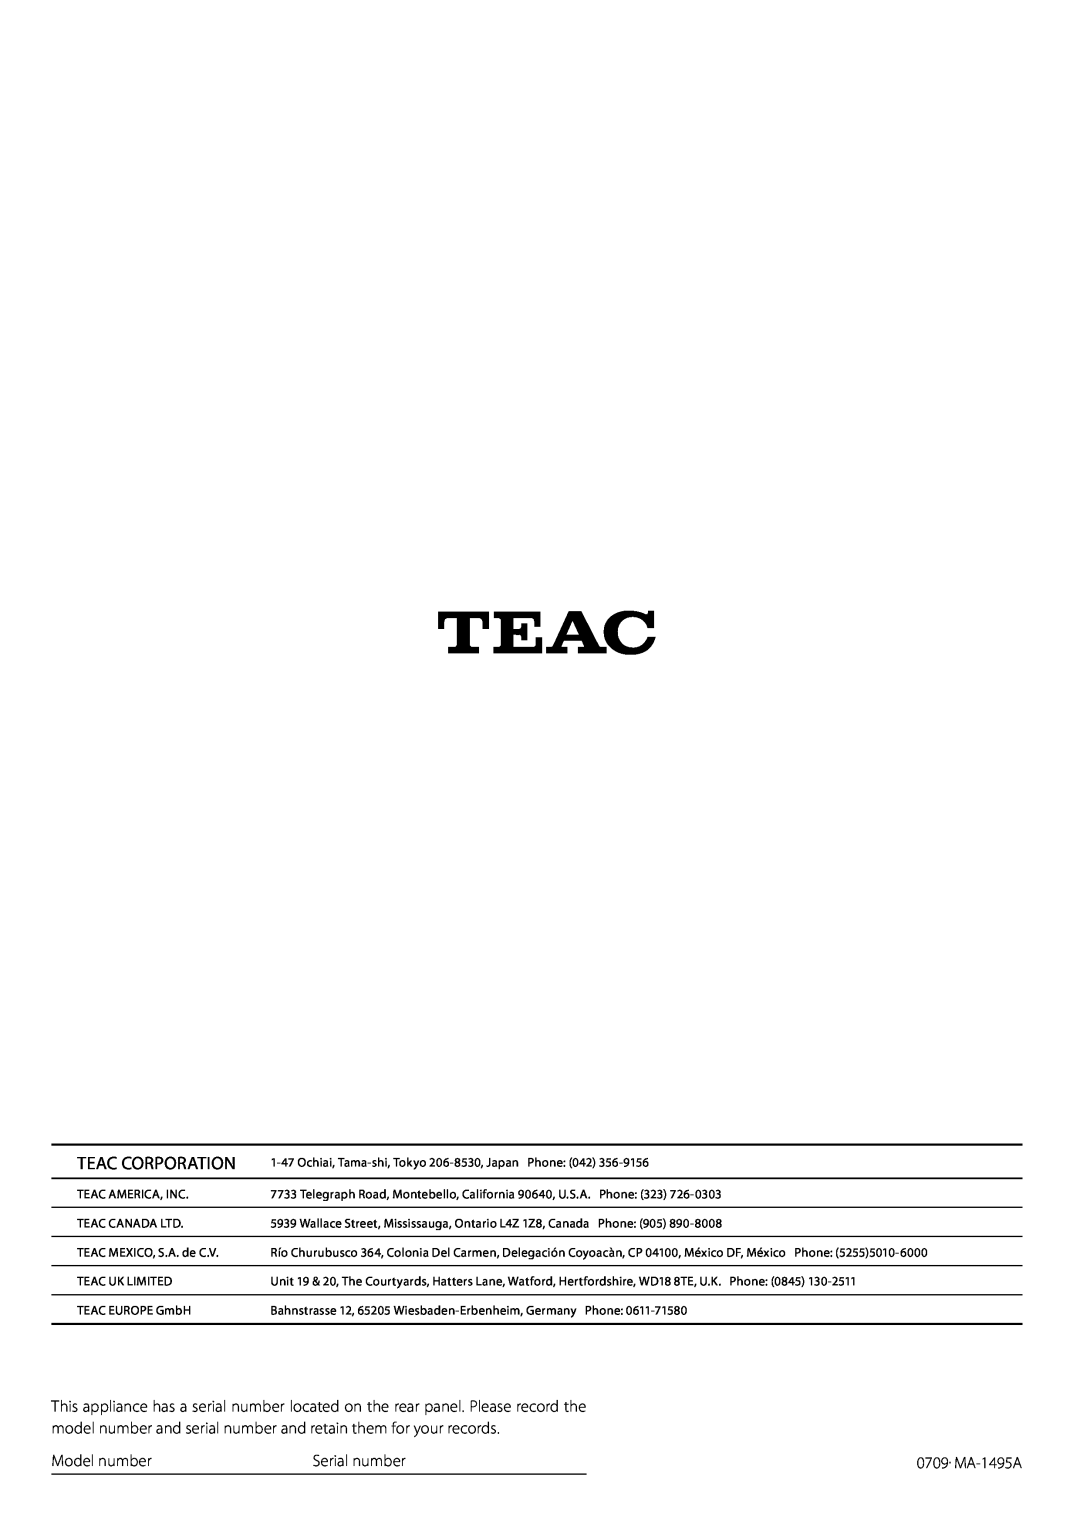 Teac AG-H380 owner manual Teac Corporation, Model number, Serial number 